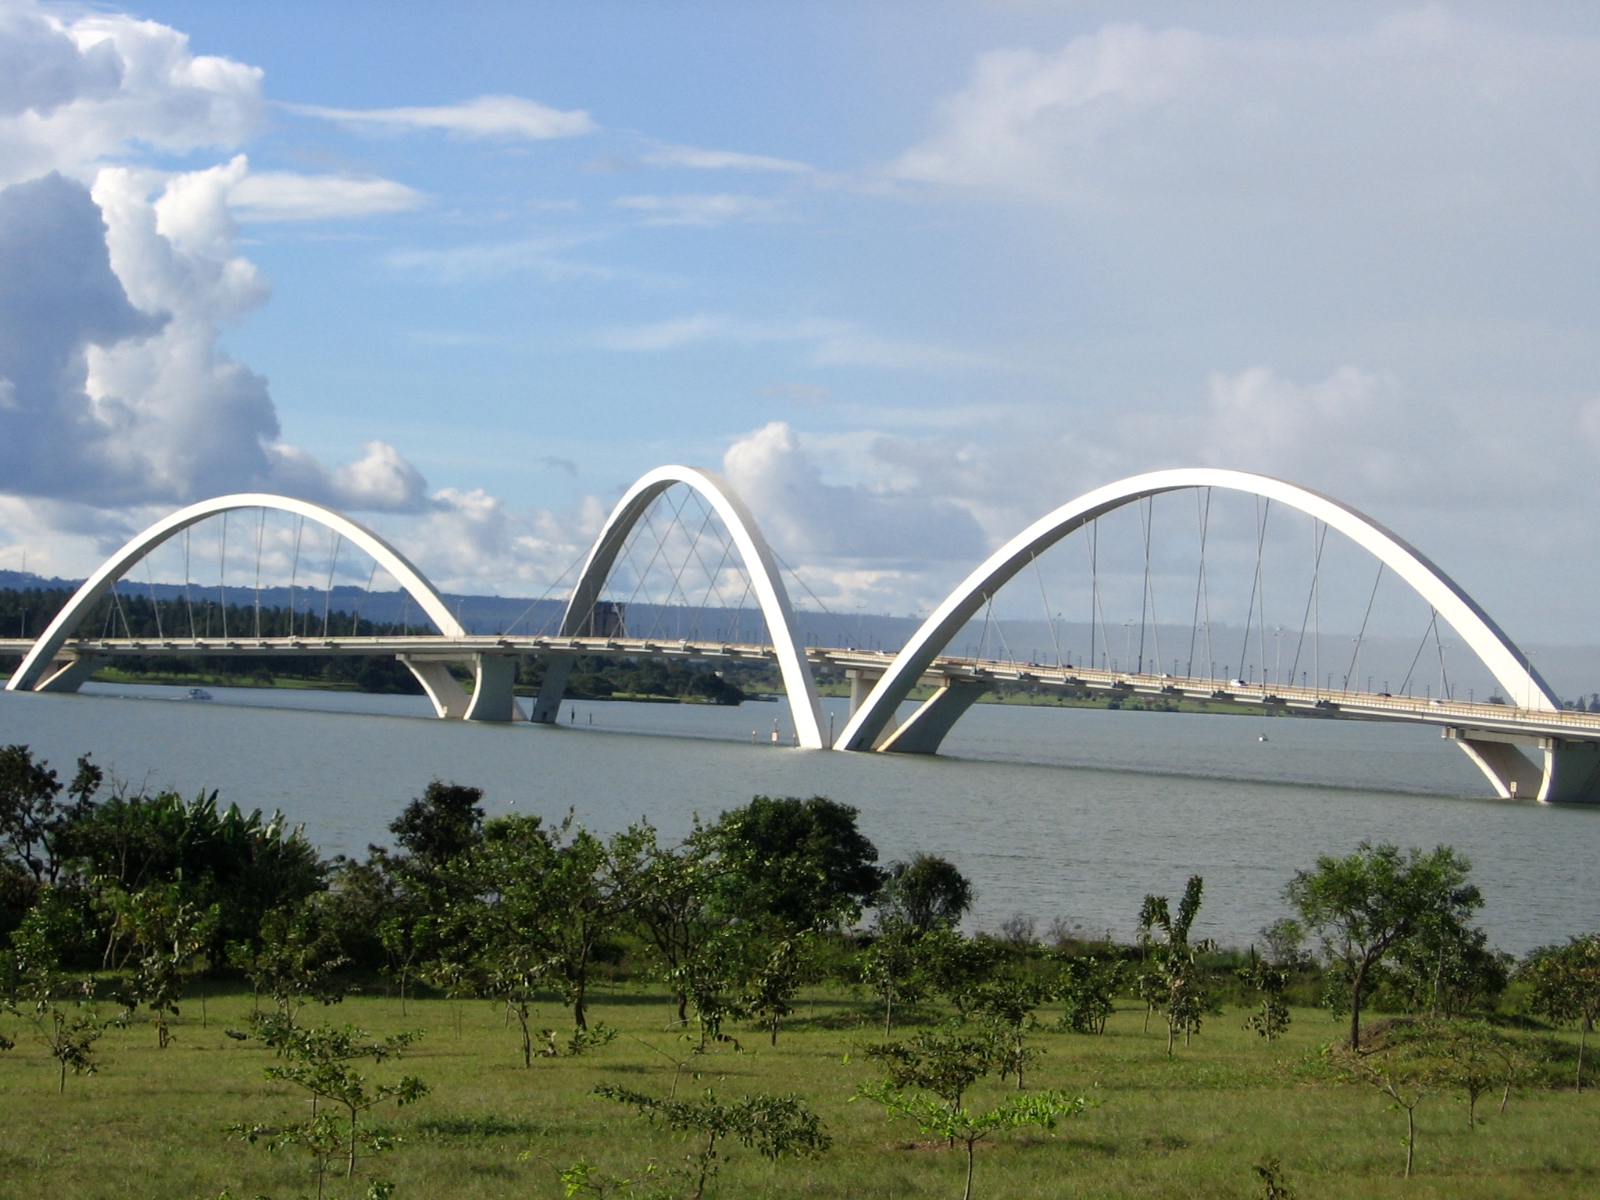 Новая столица бразилии. Мост Жуселину Кубичека. Мост Жуселину Кубичека Бразилиа. Мост Жуселину Кубичека, Бразилиа, Бразилия. Мост Juscelino Kubitschek в Бразилиа (Бразилия).